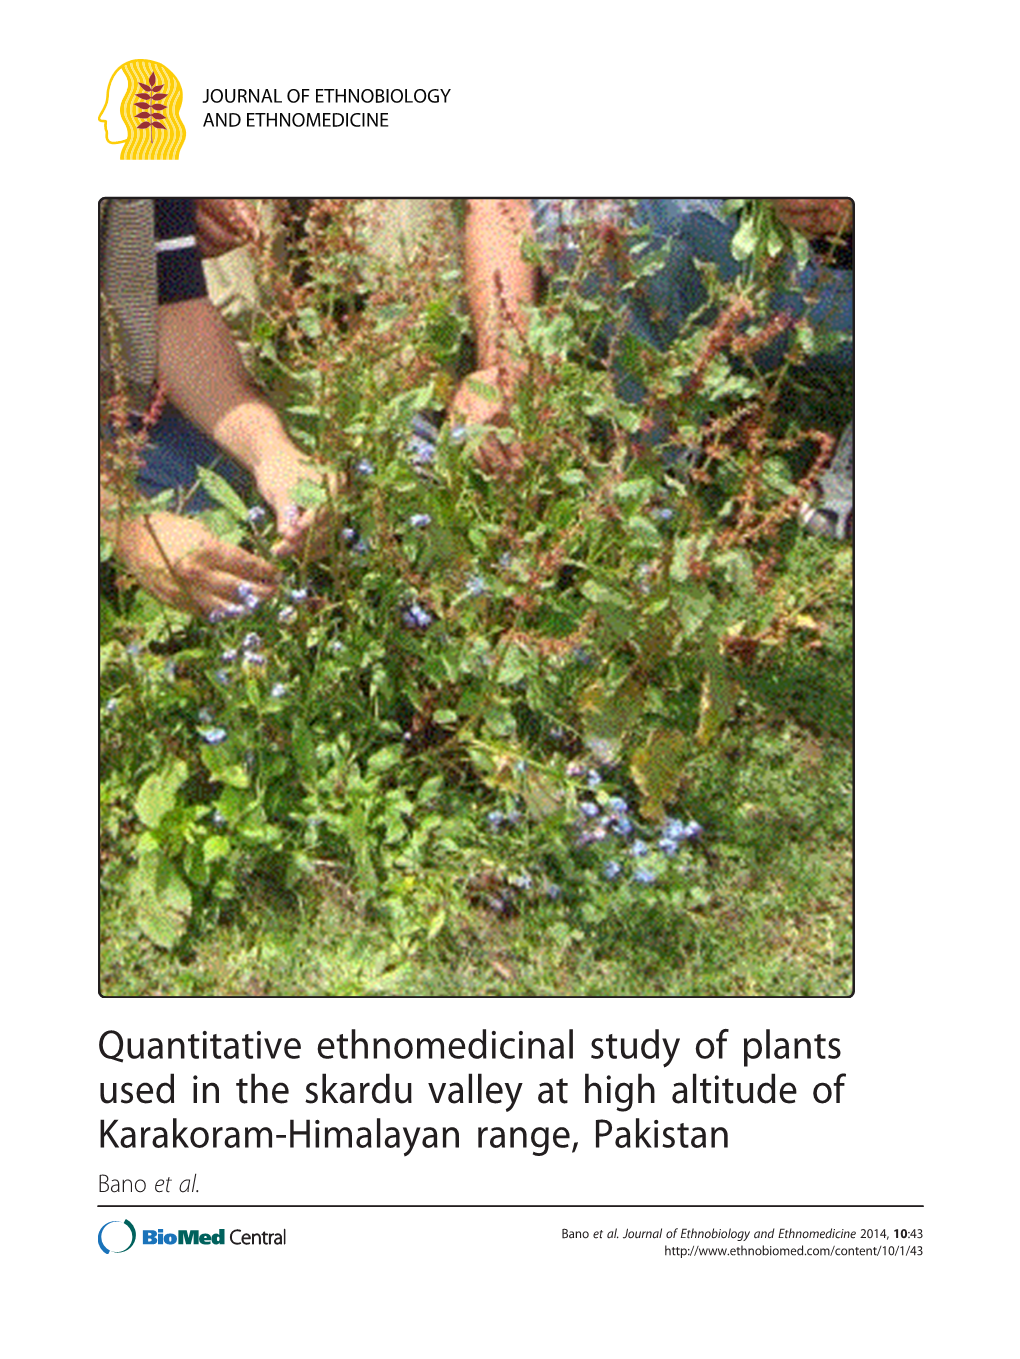 Quantitative Ethnomedicinal Study of Plants Used in the Skardu Valley at High Altitude of Karakoram-Himalayan Range, Pakistan Bano Et Al